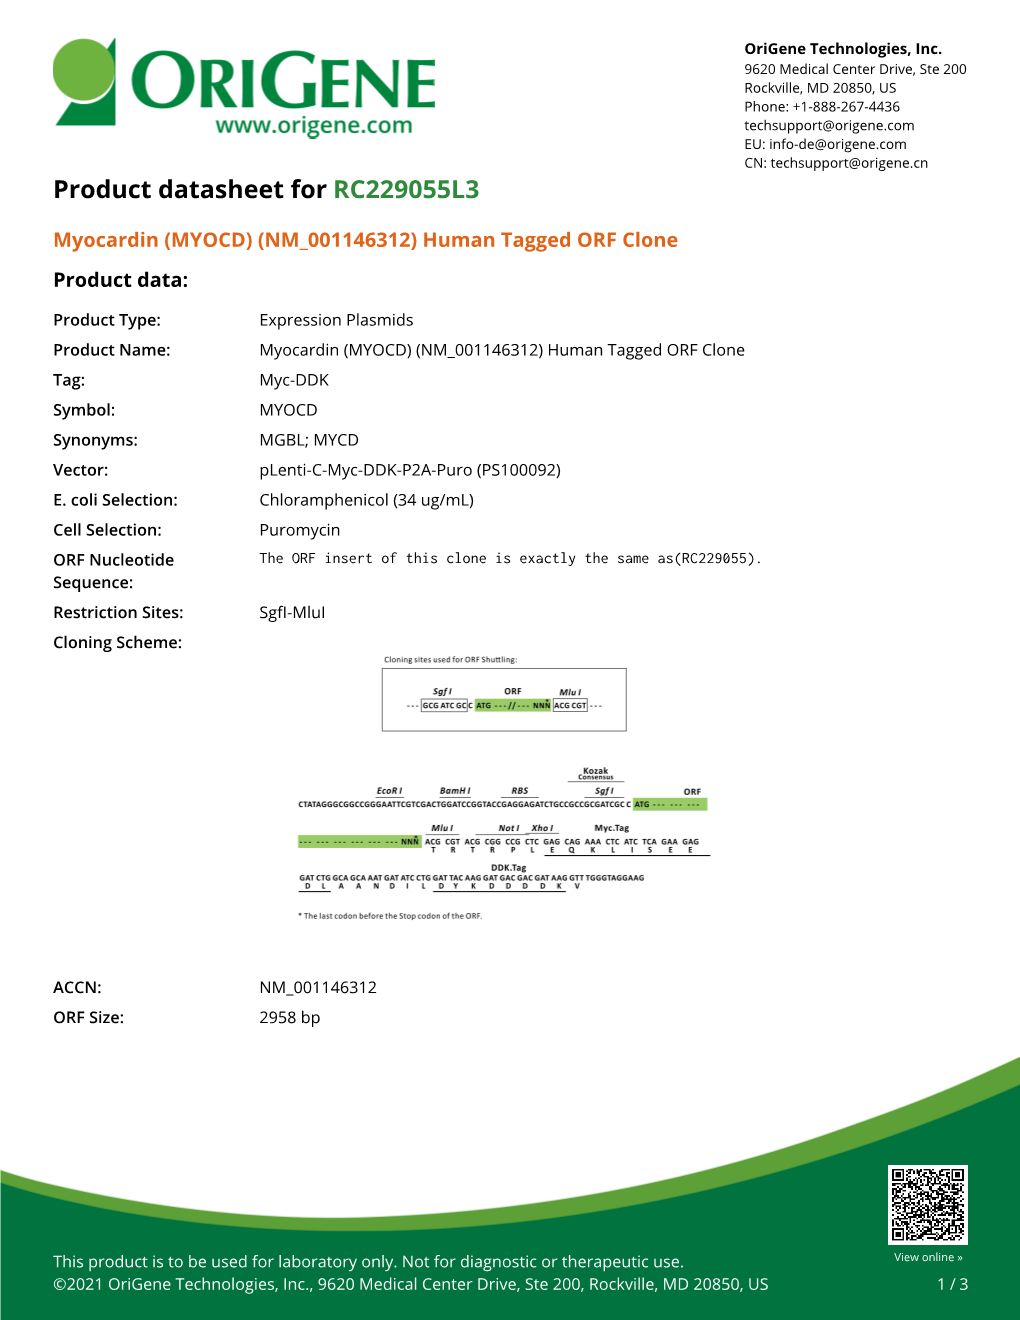 Myocardin (MYOCD) (NM 001146312) Human Tagged ORF Clone Product Data